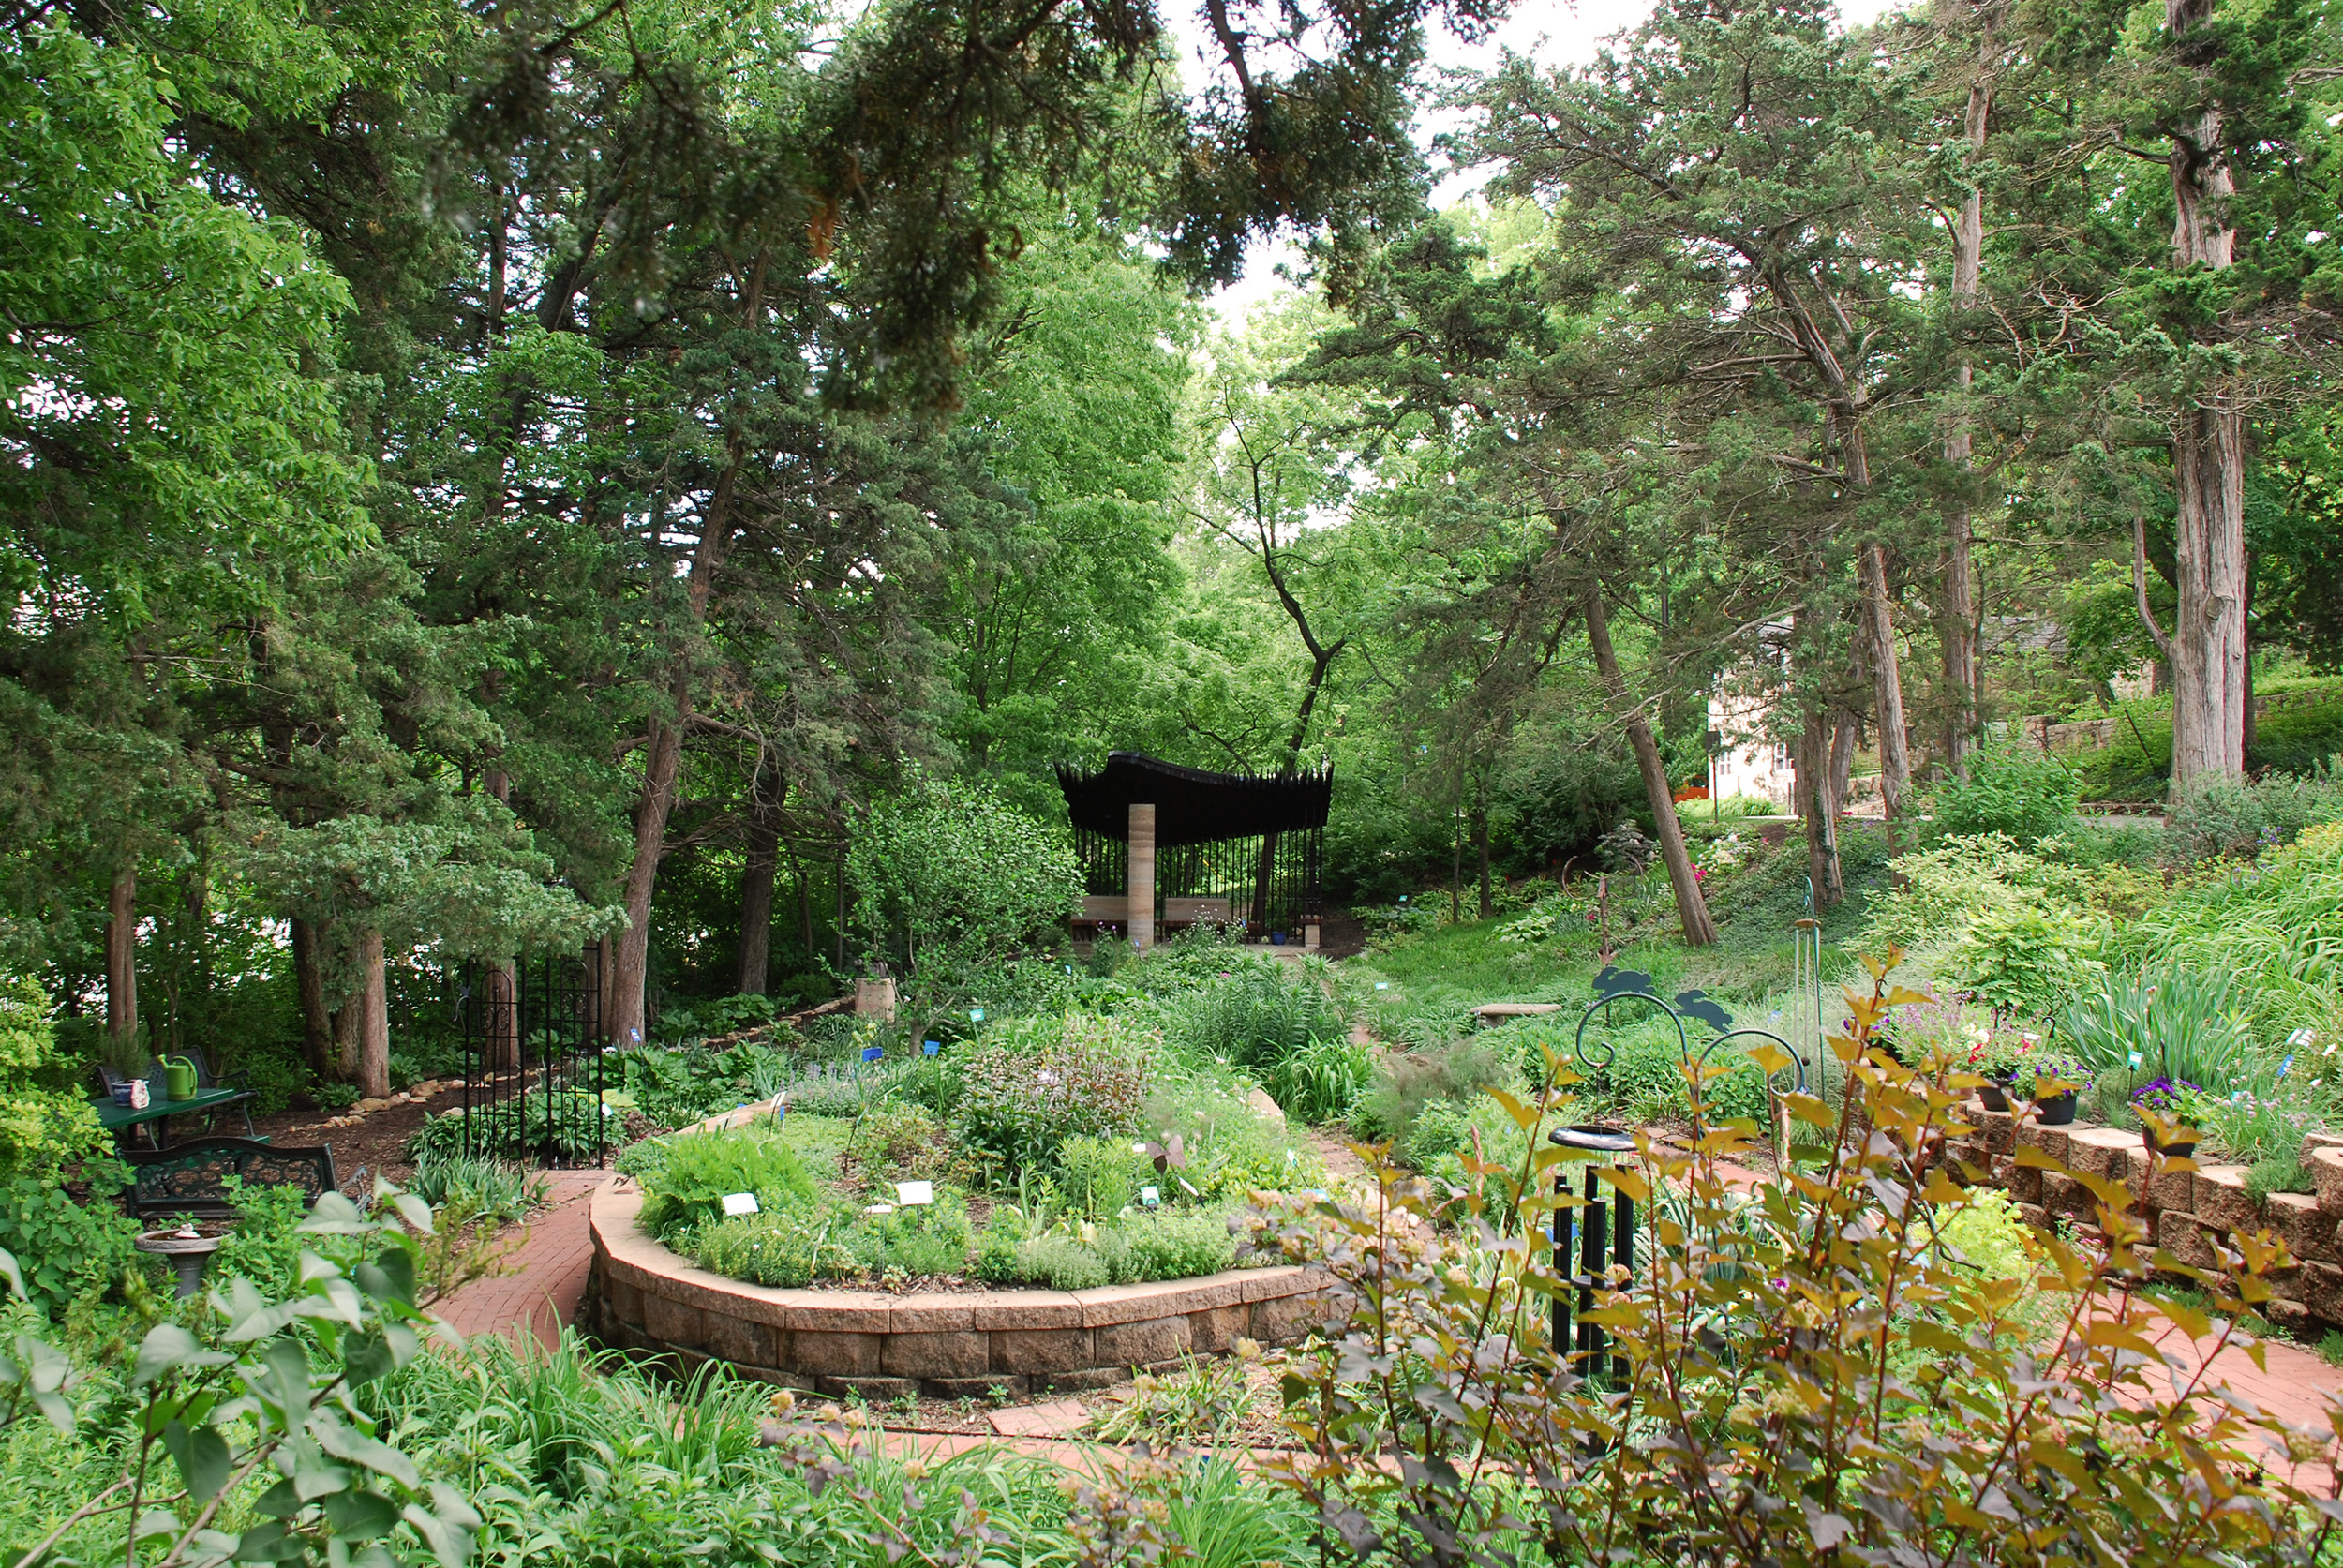 Sensory Pavilion, from the entrance to the Sensory Garden